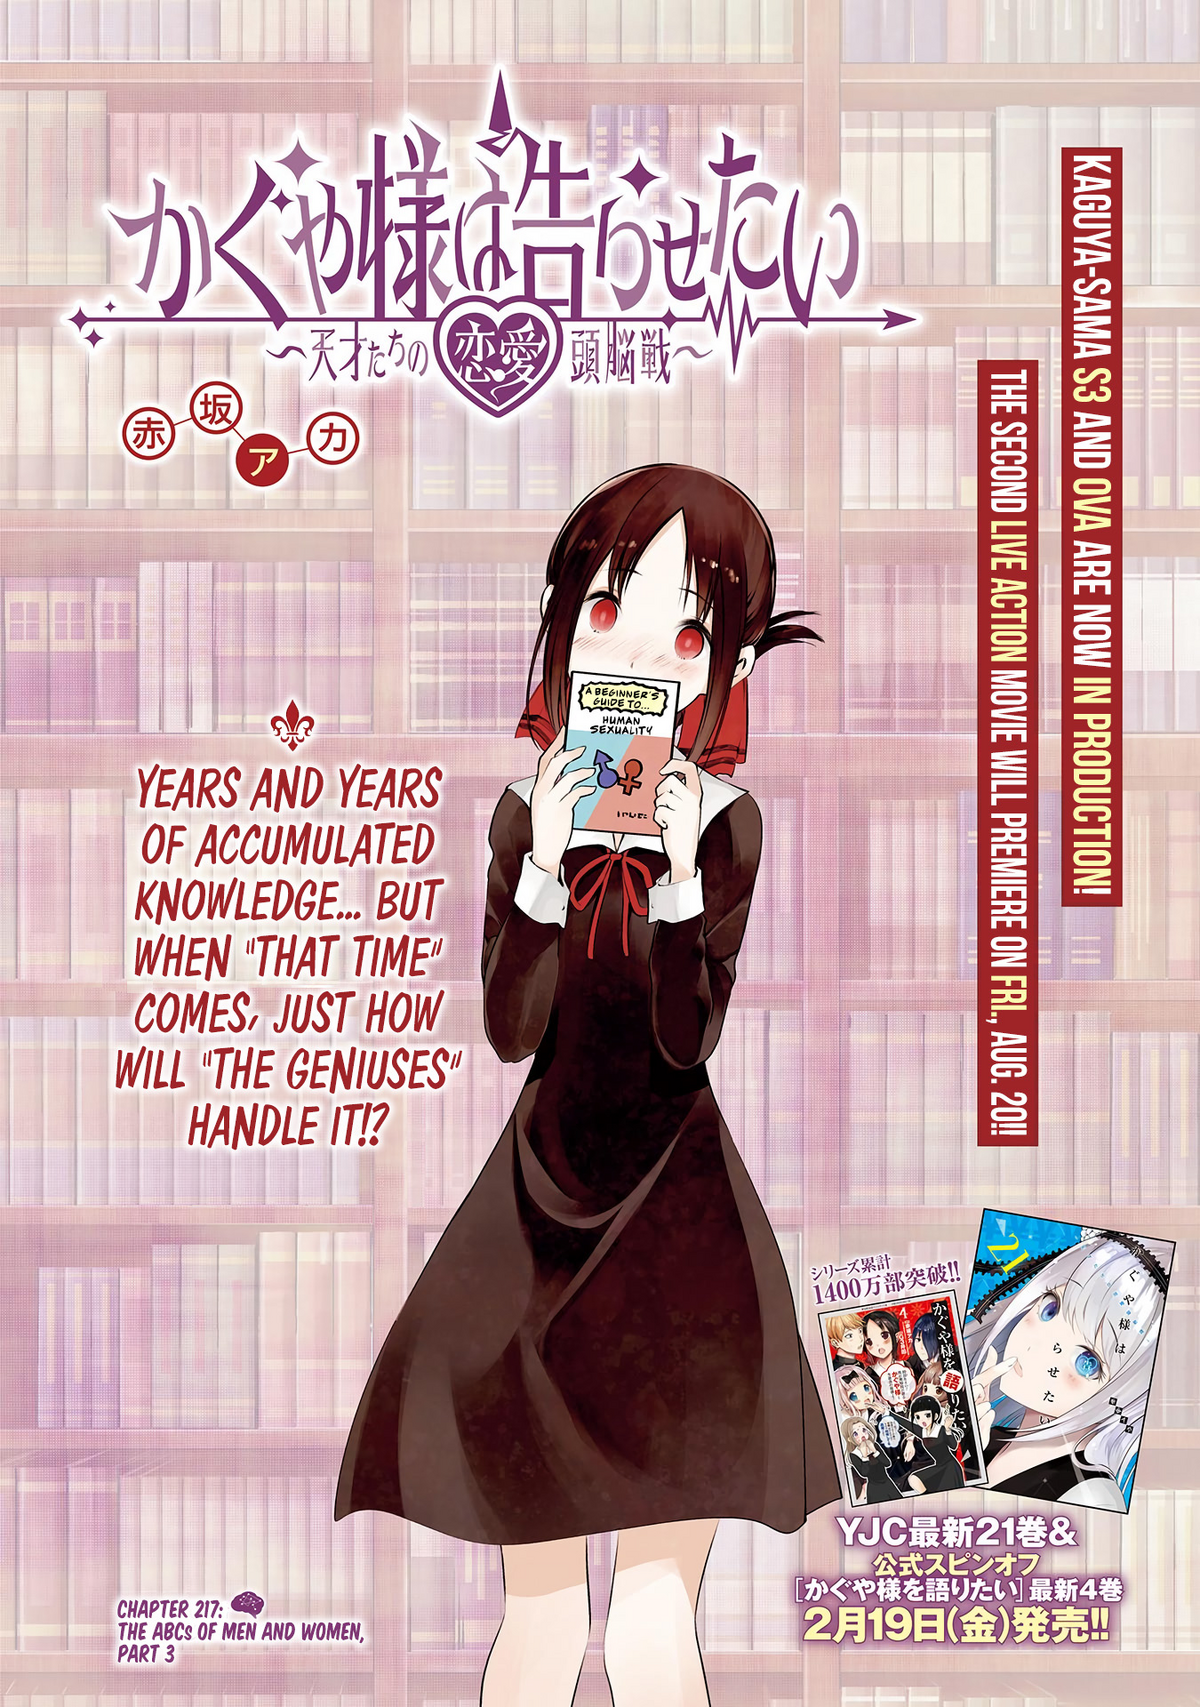 Kaguya-sama Chapter 213 delayed, manga to focus on Miyuki & Mikado's  friendship